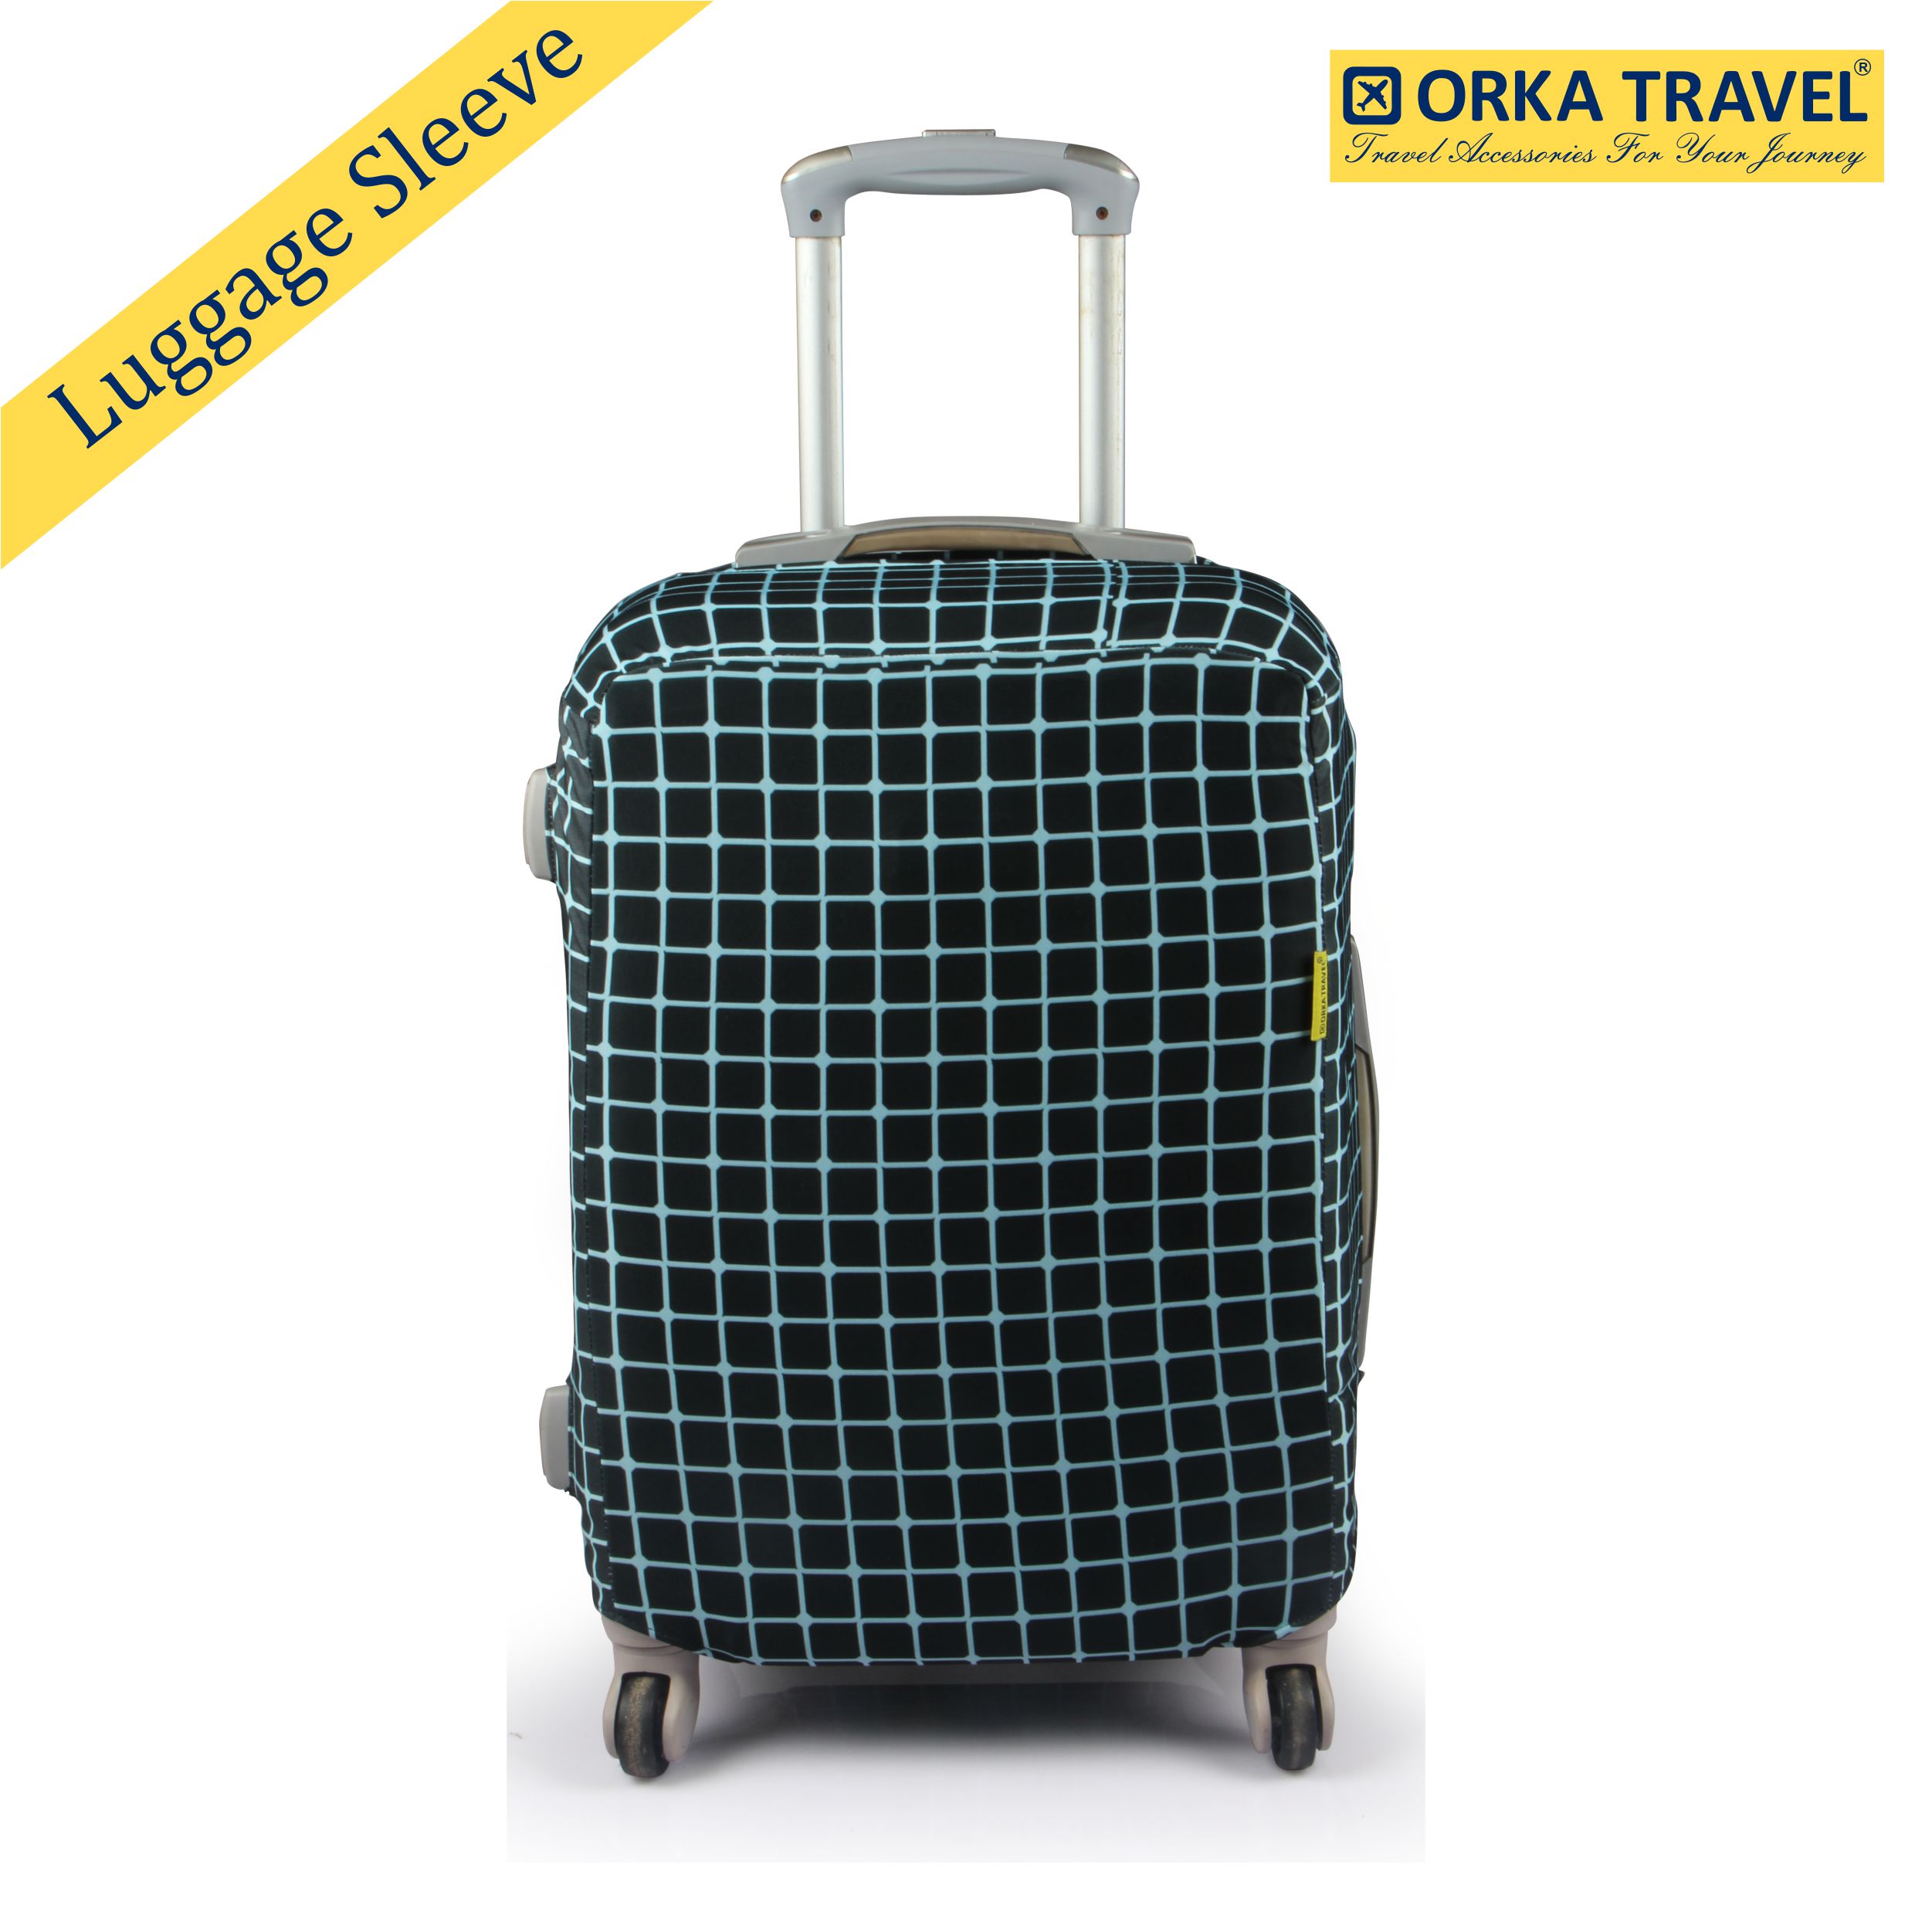 Orka Travel Luggage Cover Black Teal